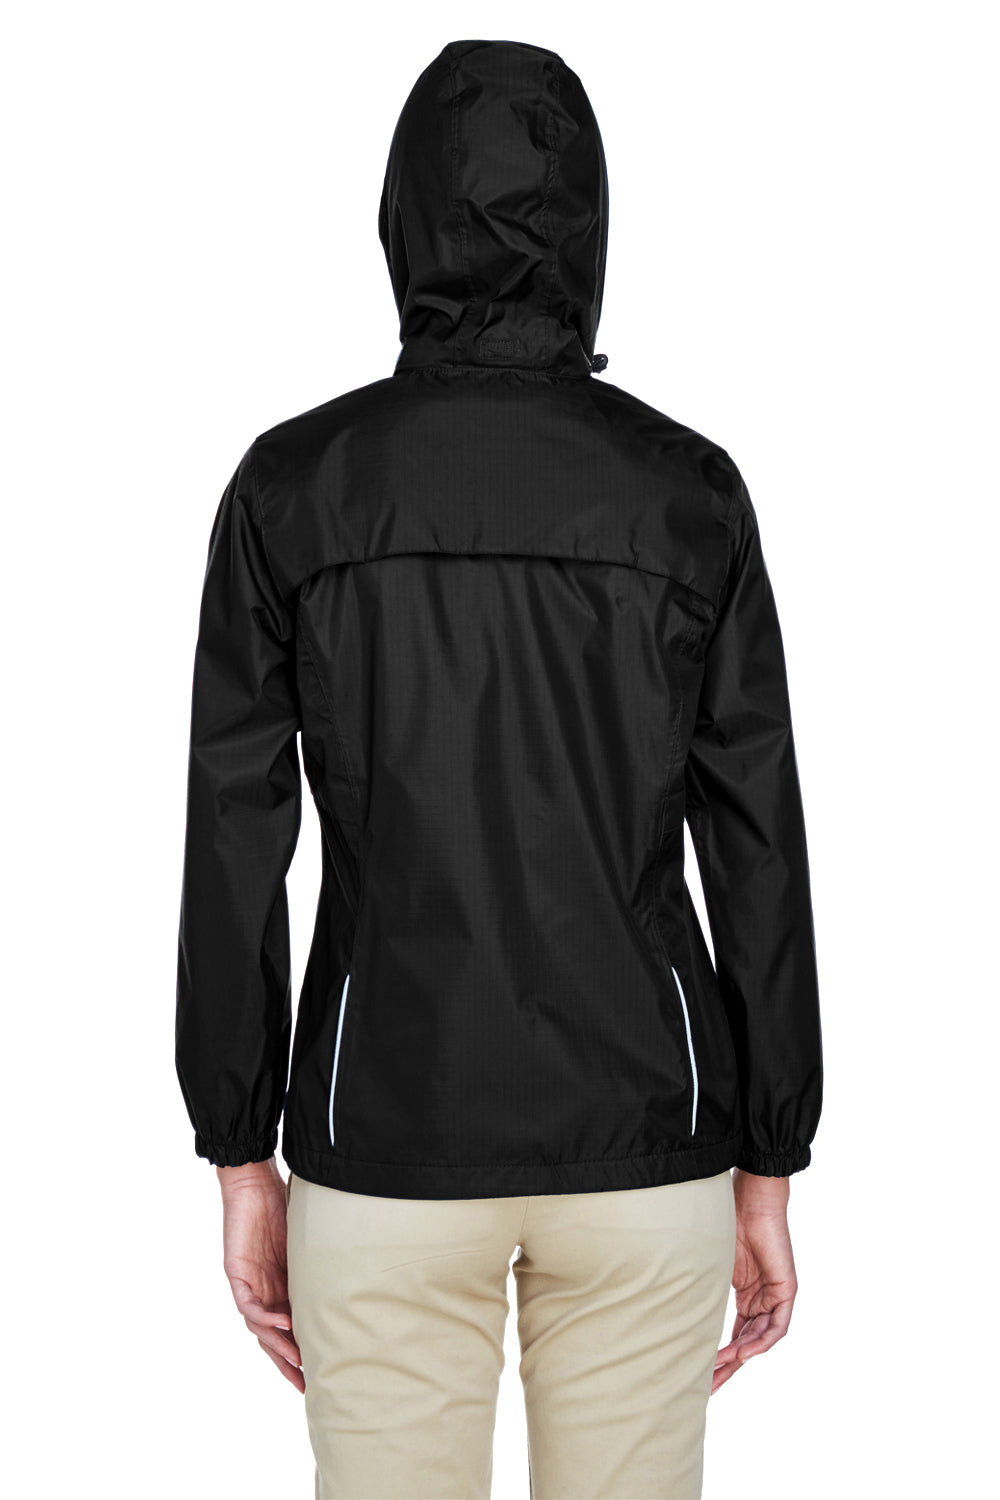 Core 365 78185 Womens Climate Waterproof Full Zip Hooded Jacket Black Back